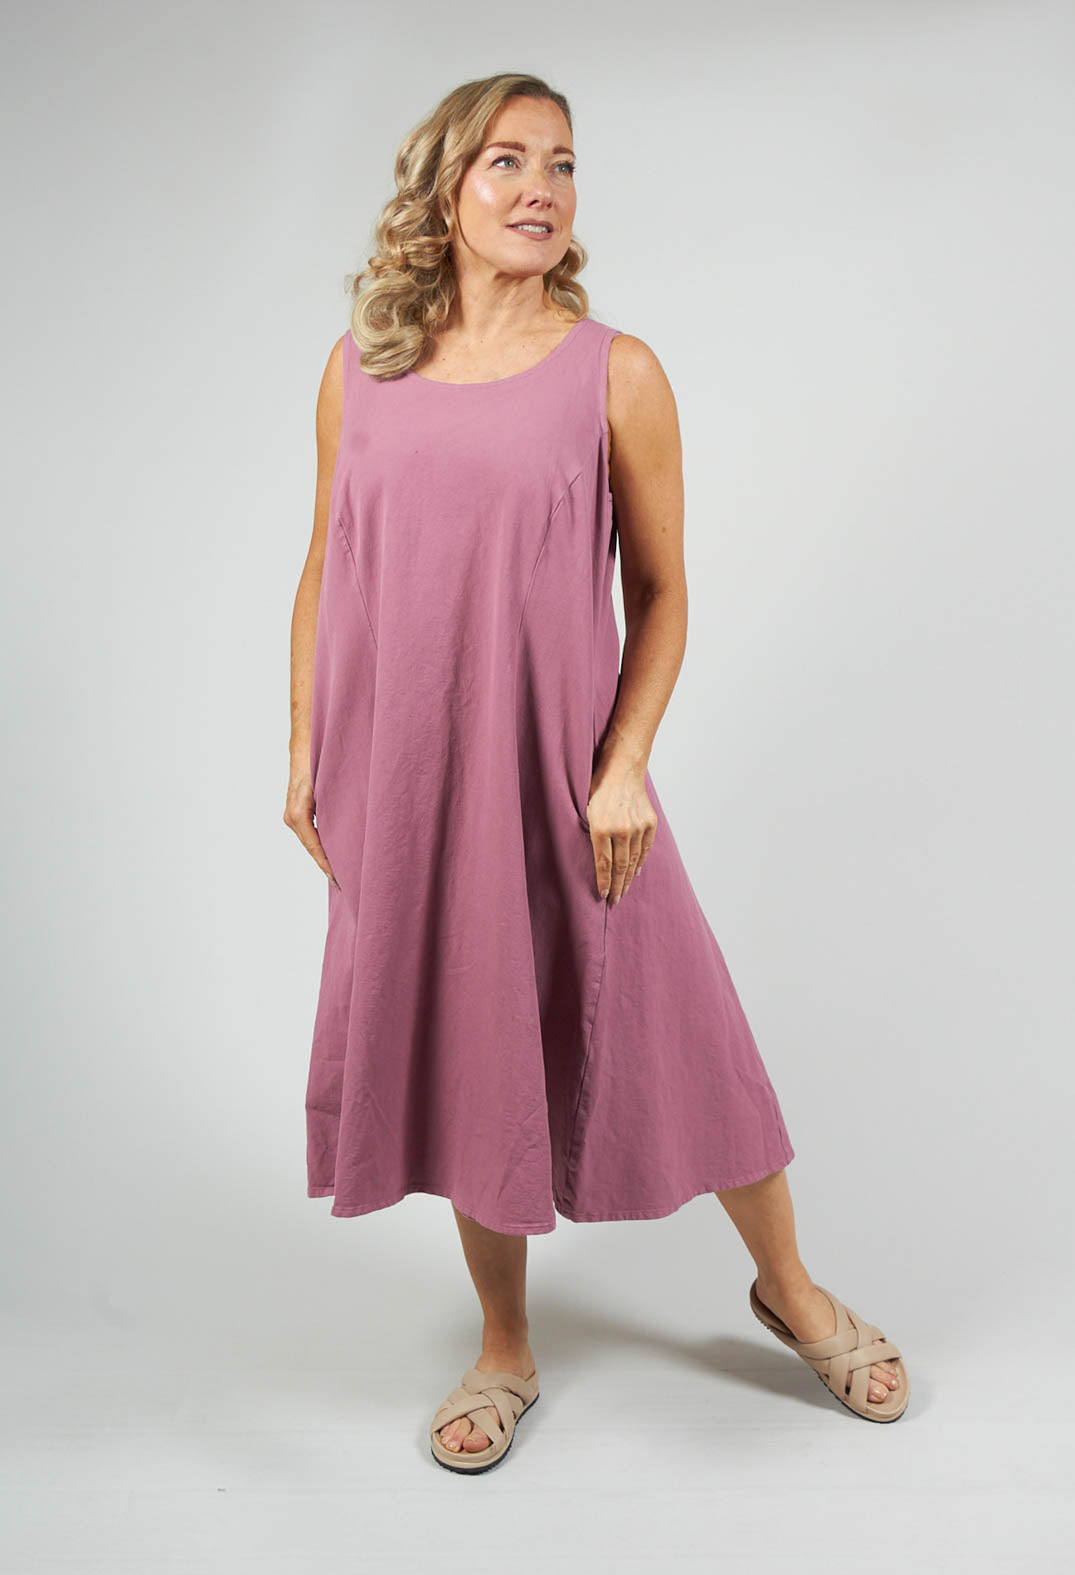 Monethese Dress in Rosenholz Pink